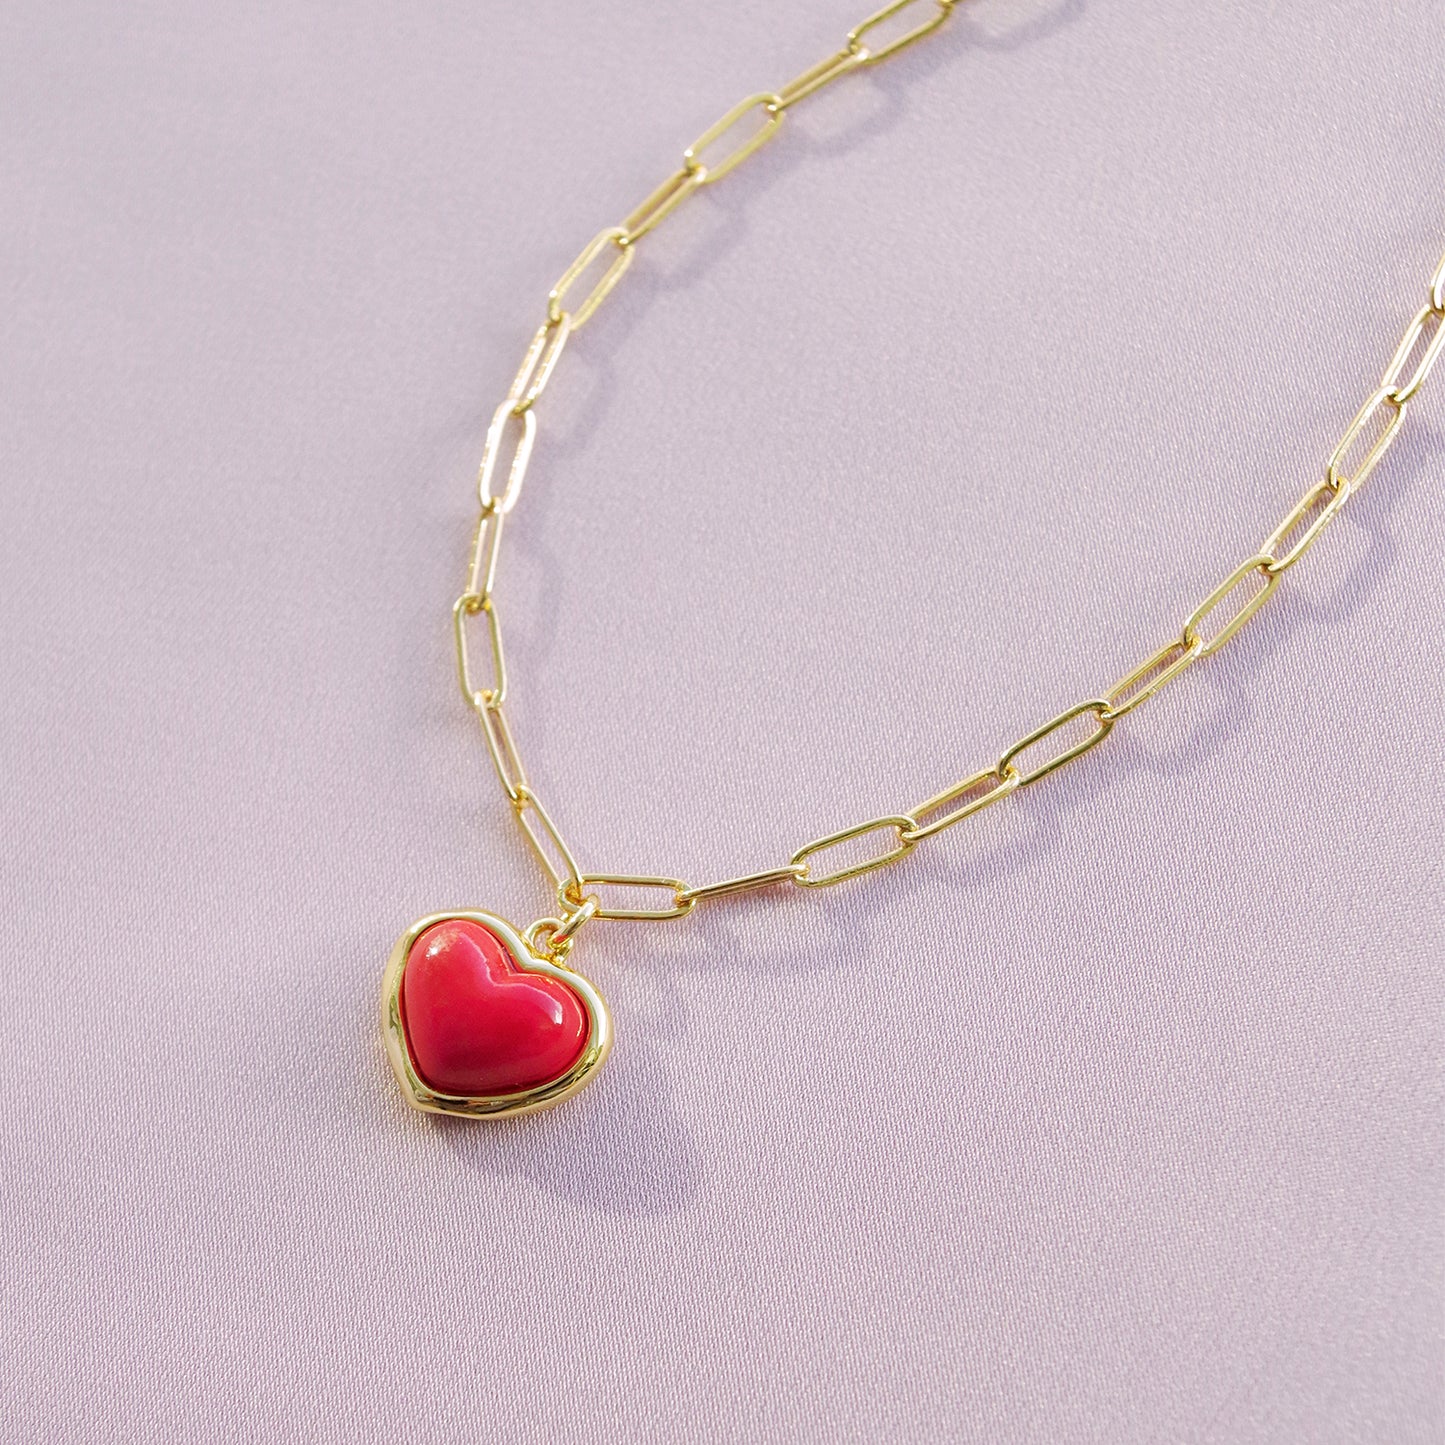 Porcelain Red Heart Pendant Necklace